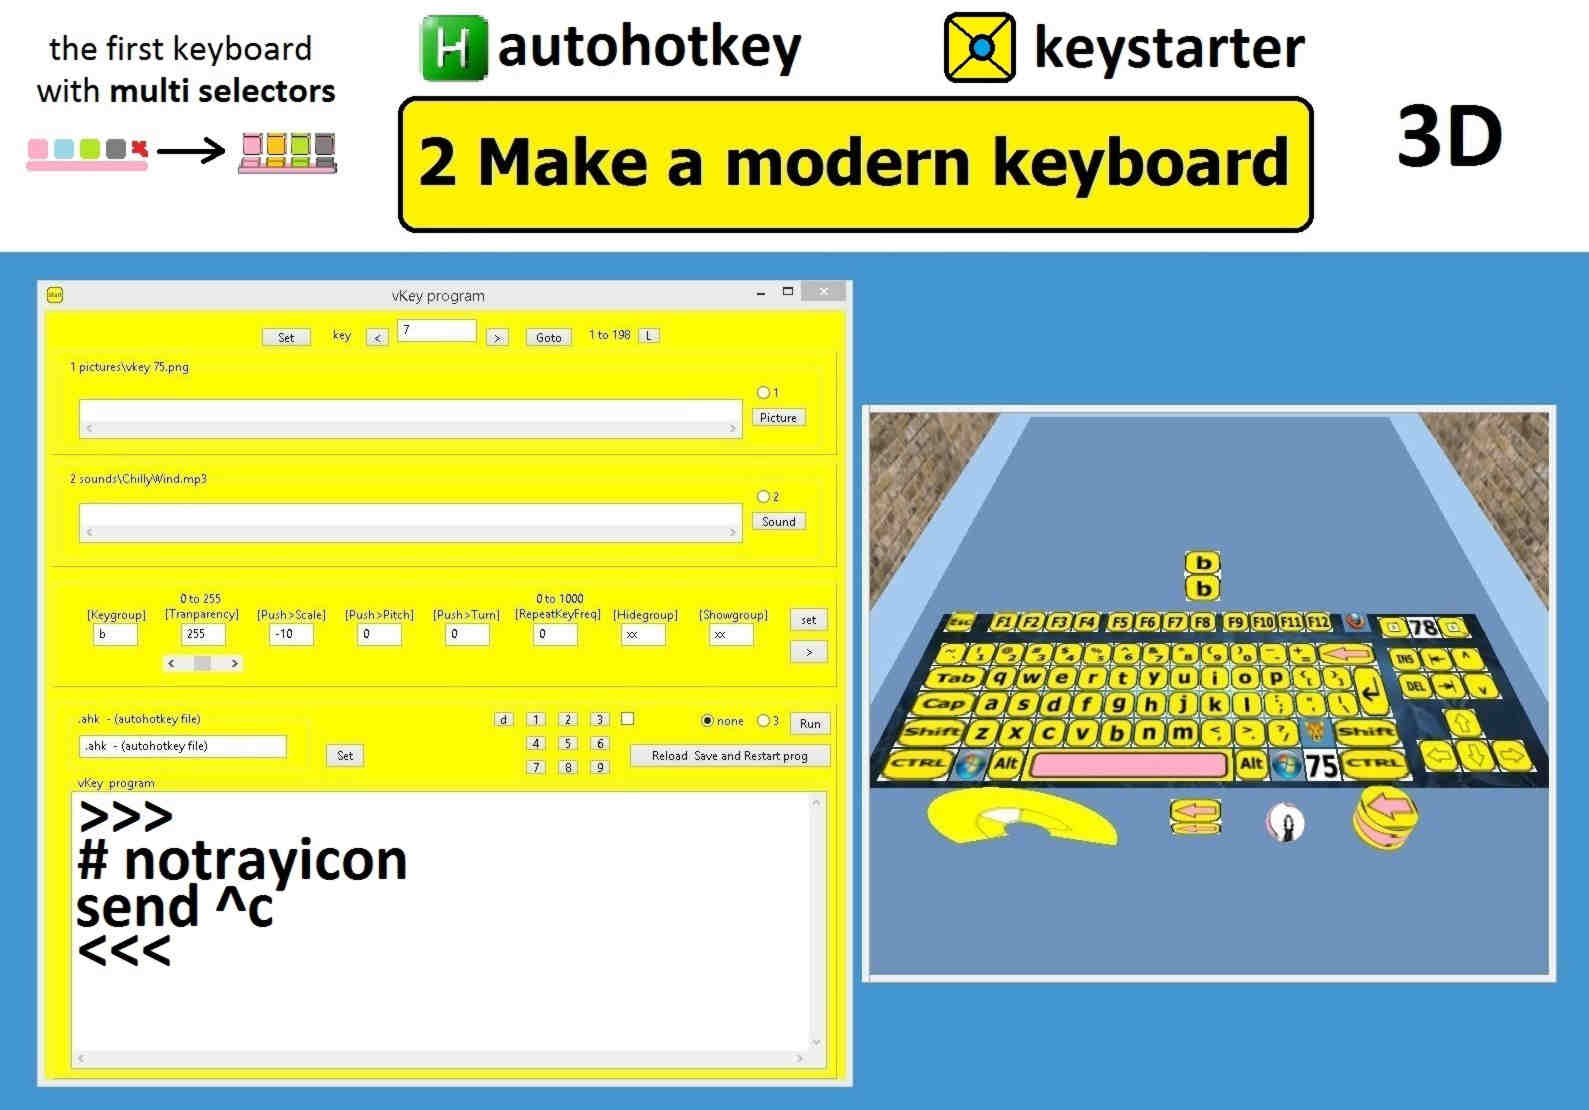 virtual keyboard in 3d